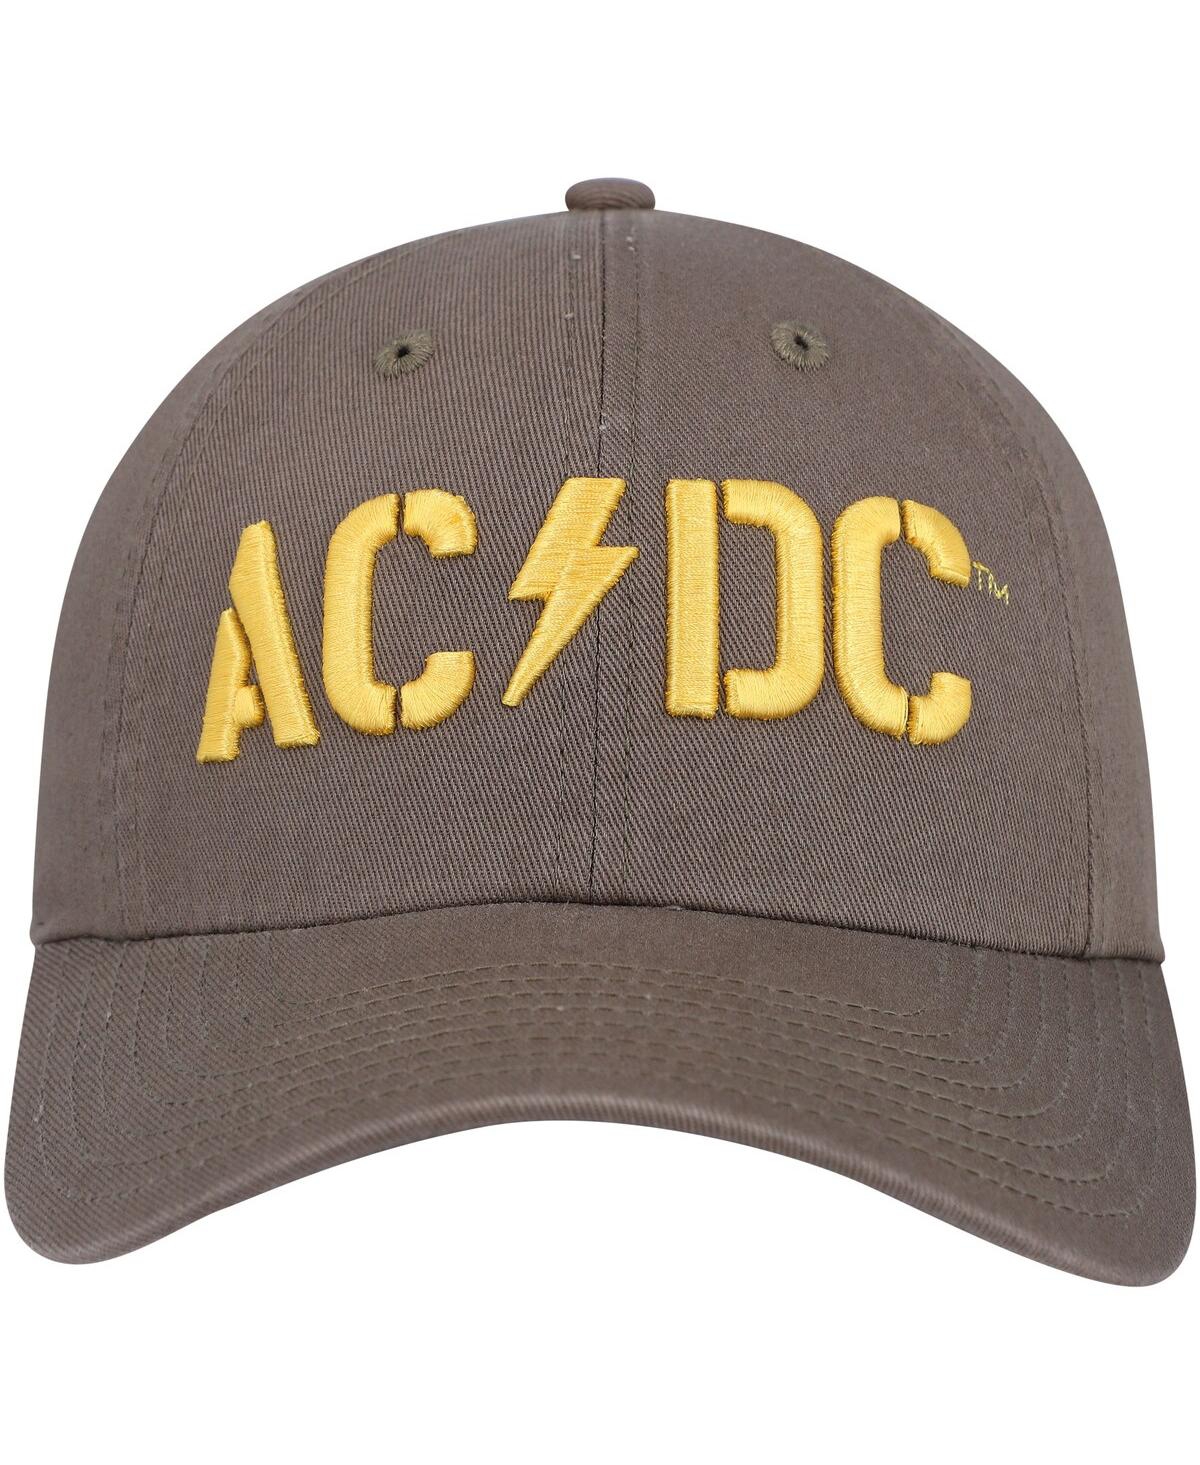 Shop American Needle Men's  Brown Ac/dc Ballpark Adjustable Hat